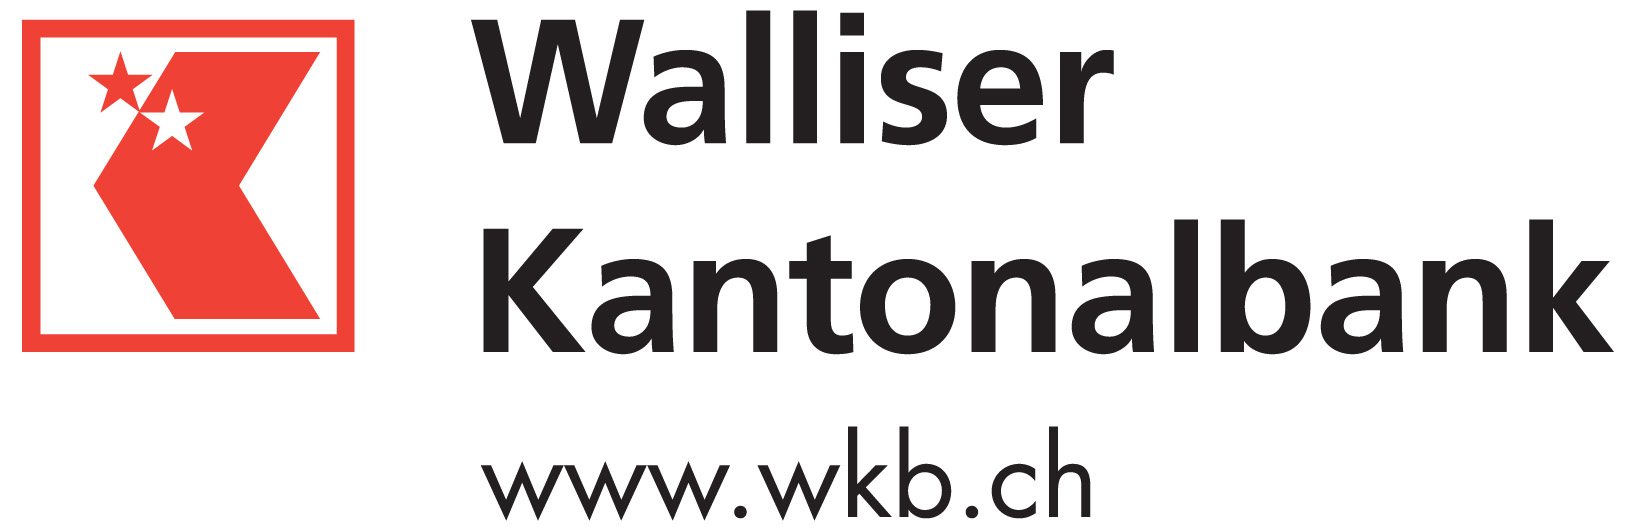 Walliser Kantonalbank, Brig